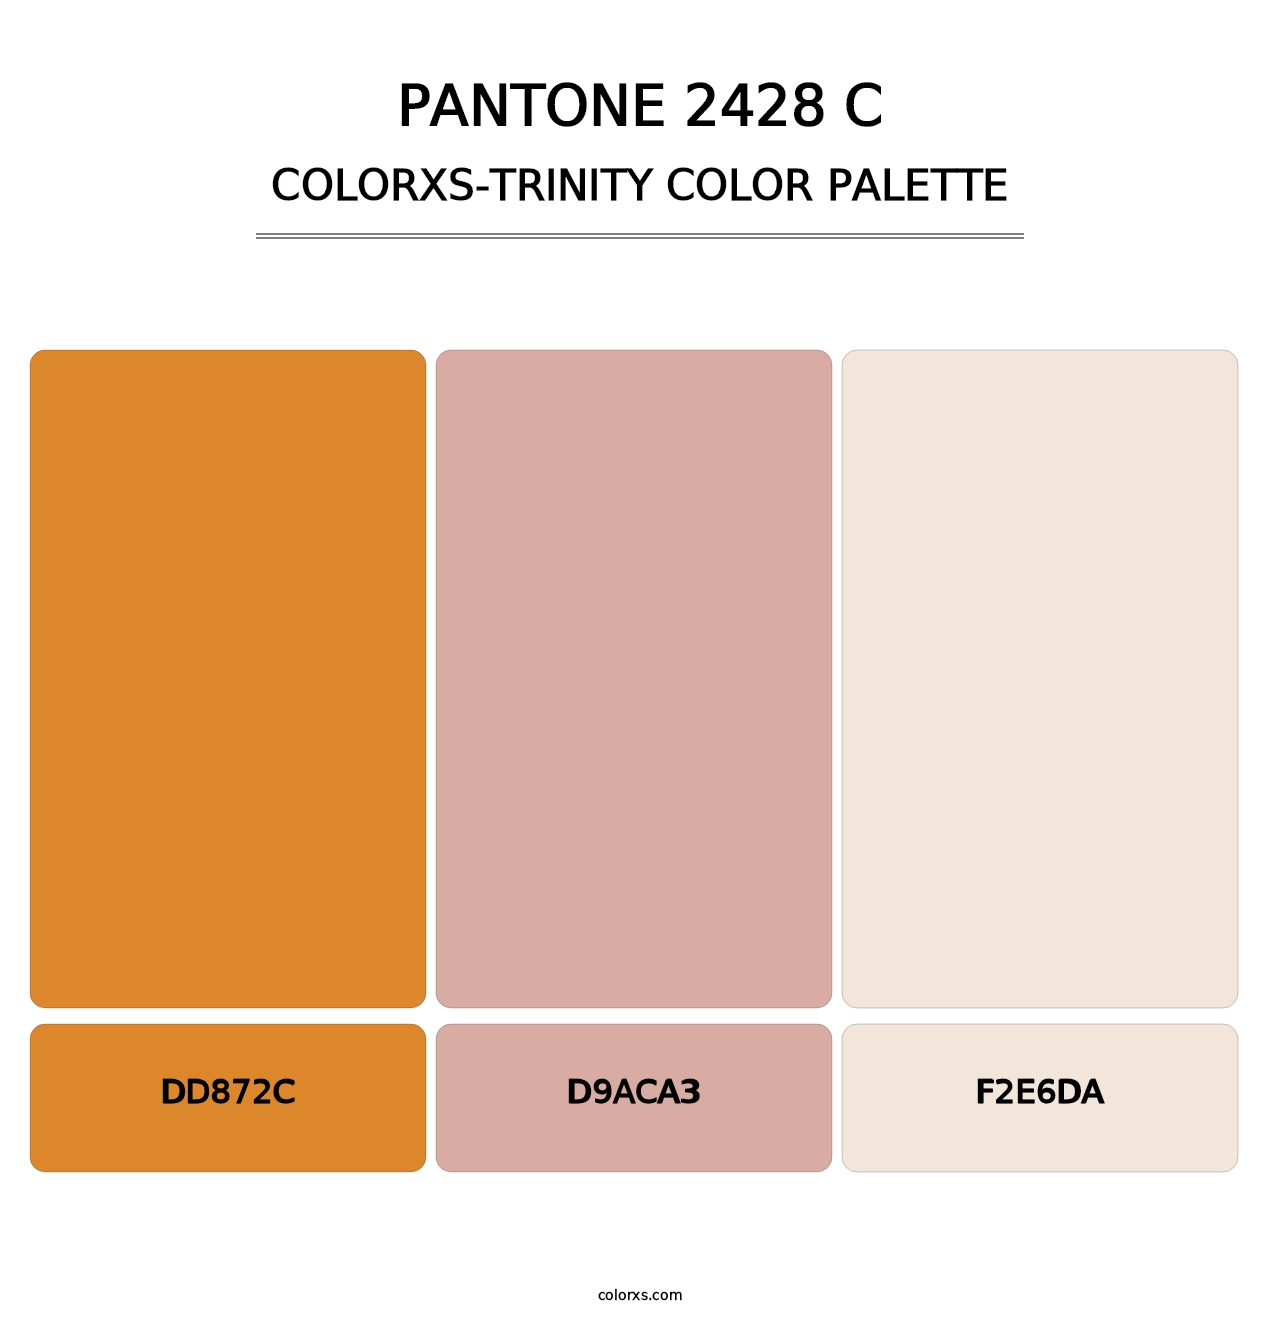 PANTONE 2428 C - Colorxs Trinity Palette